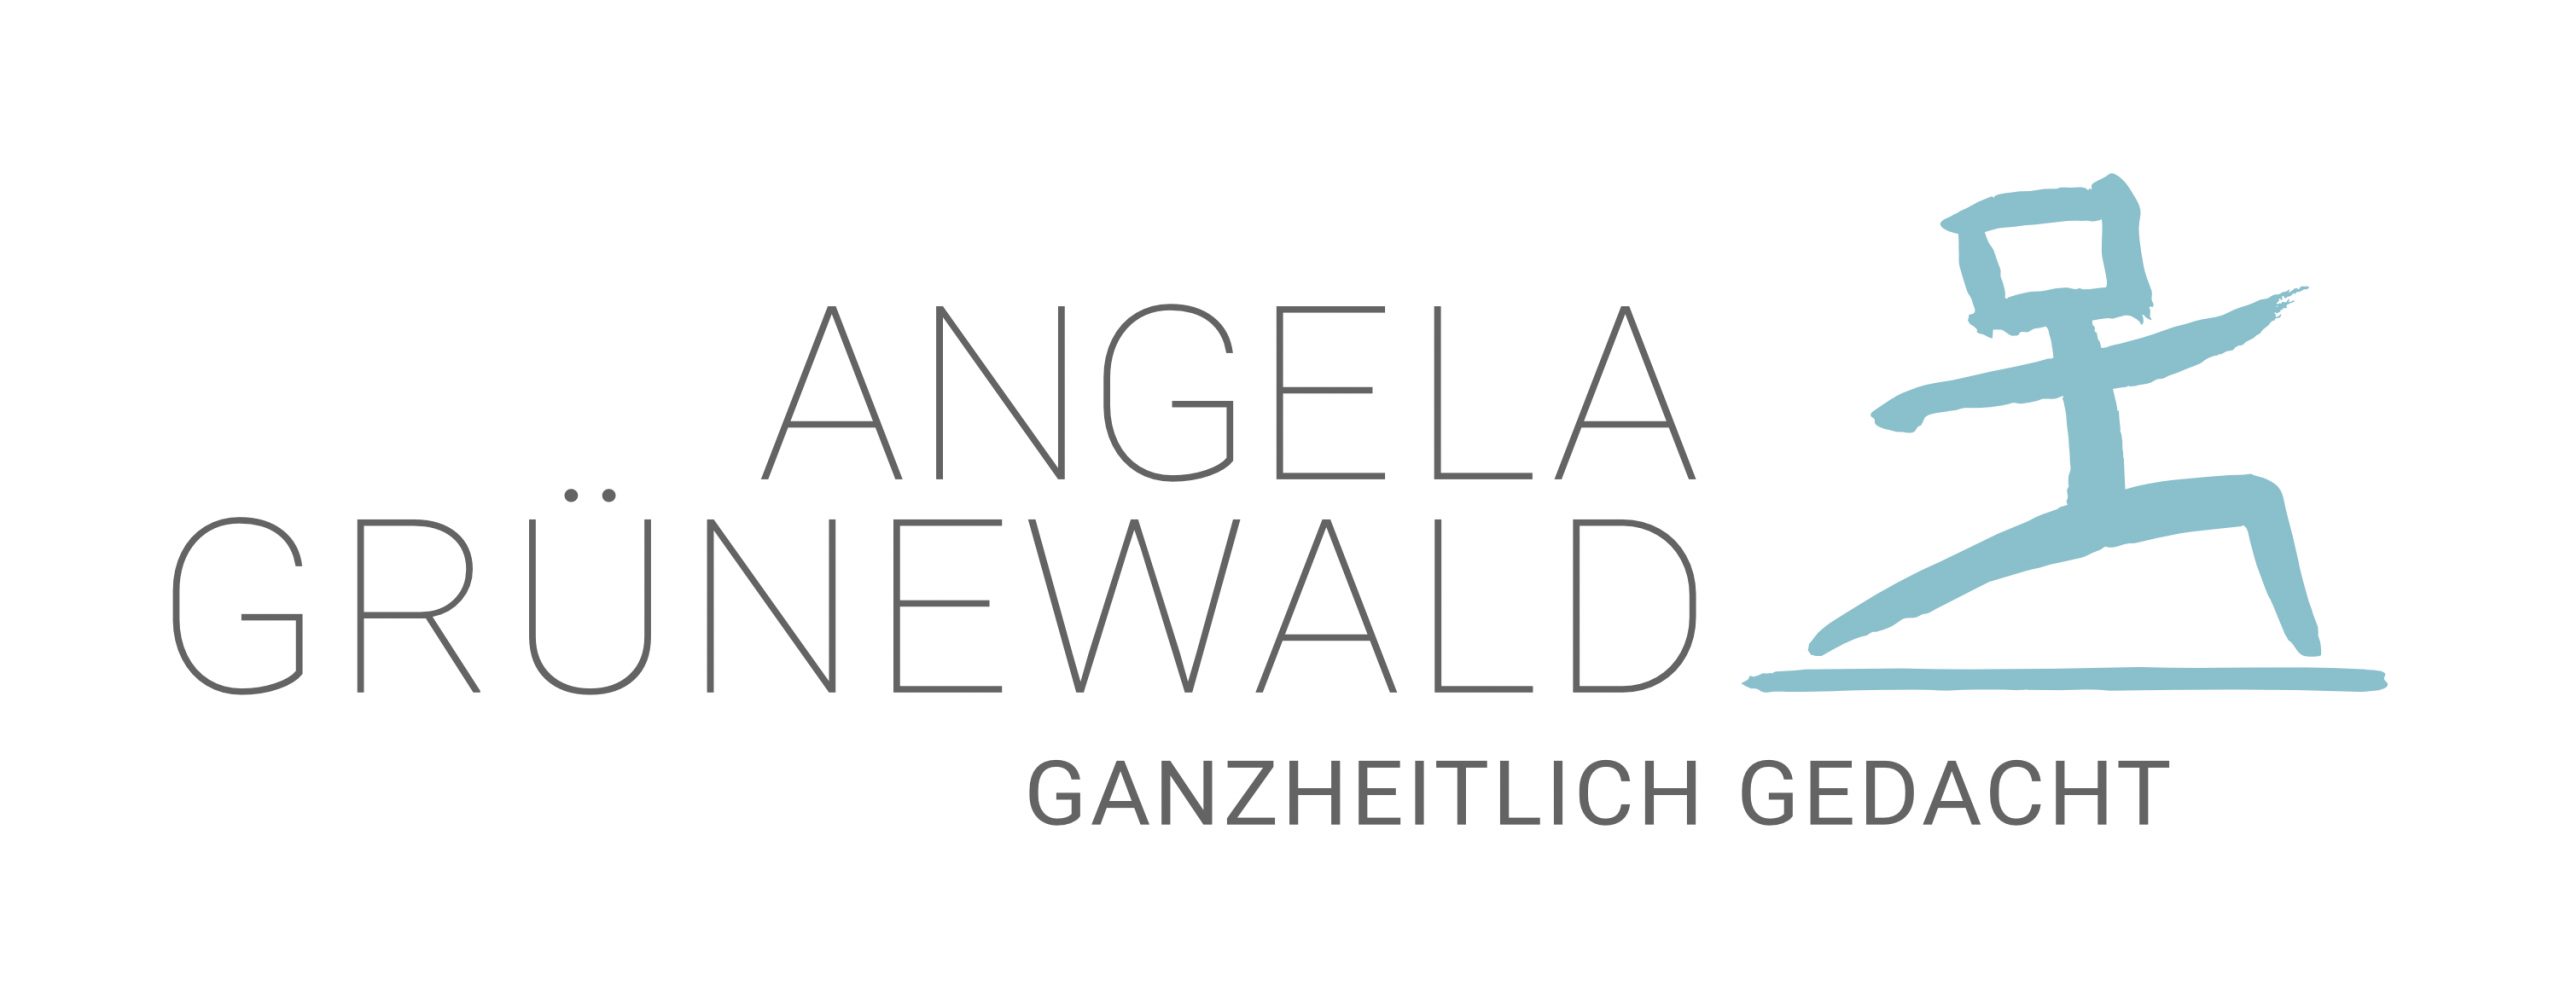 angela grünewald logo